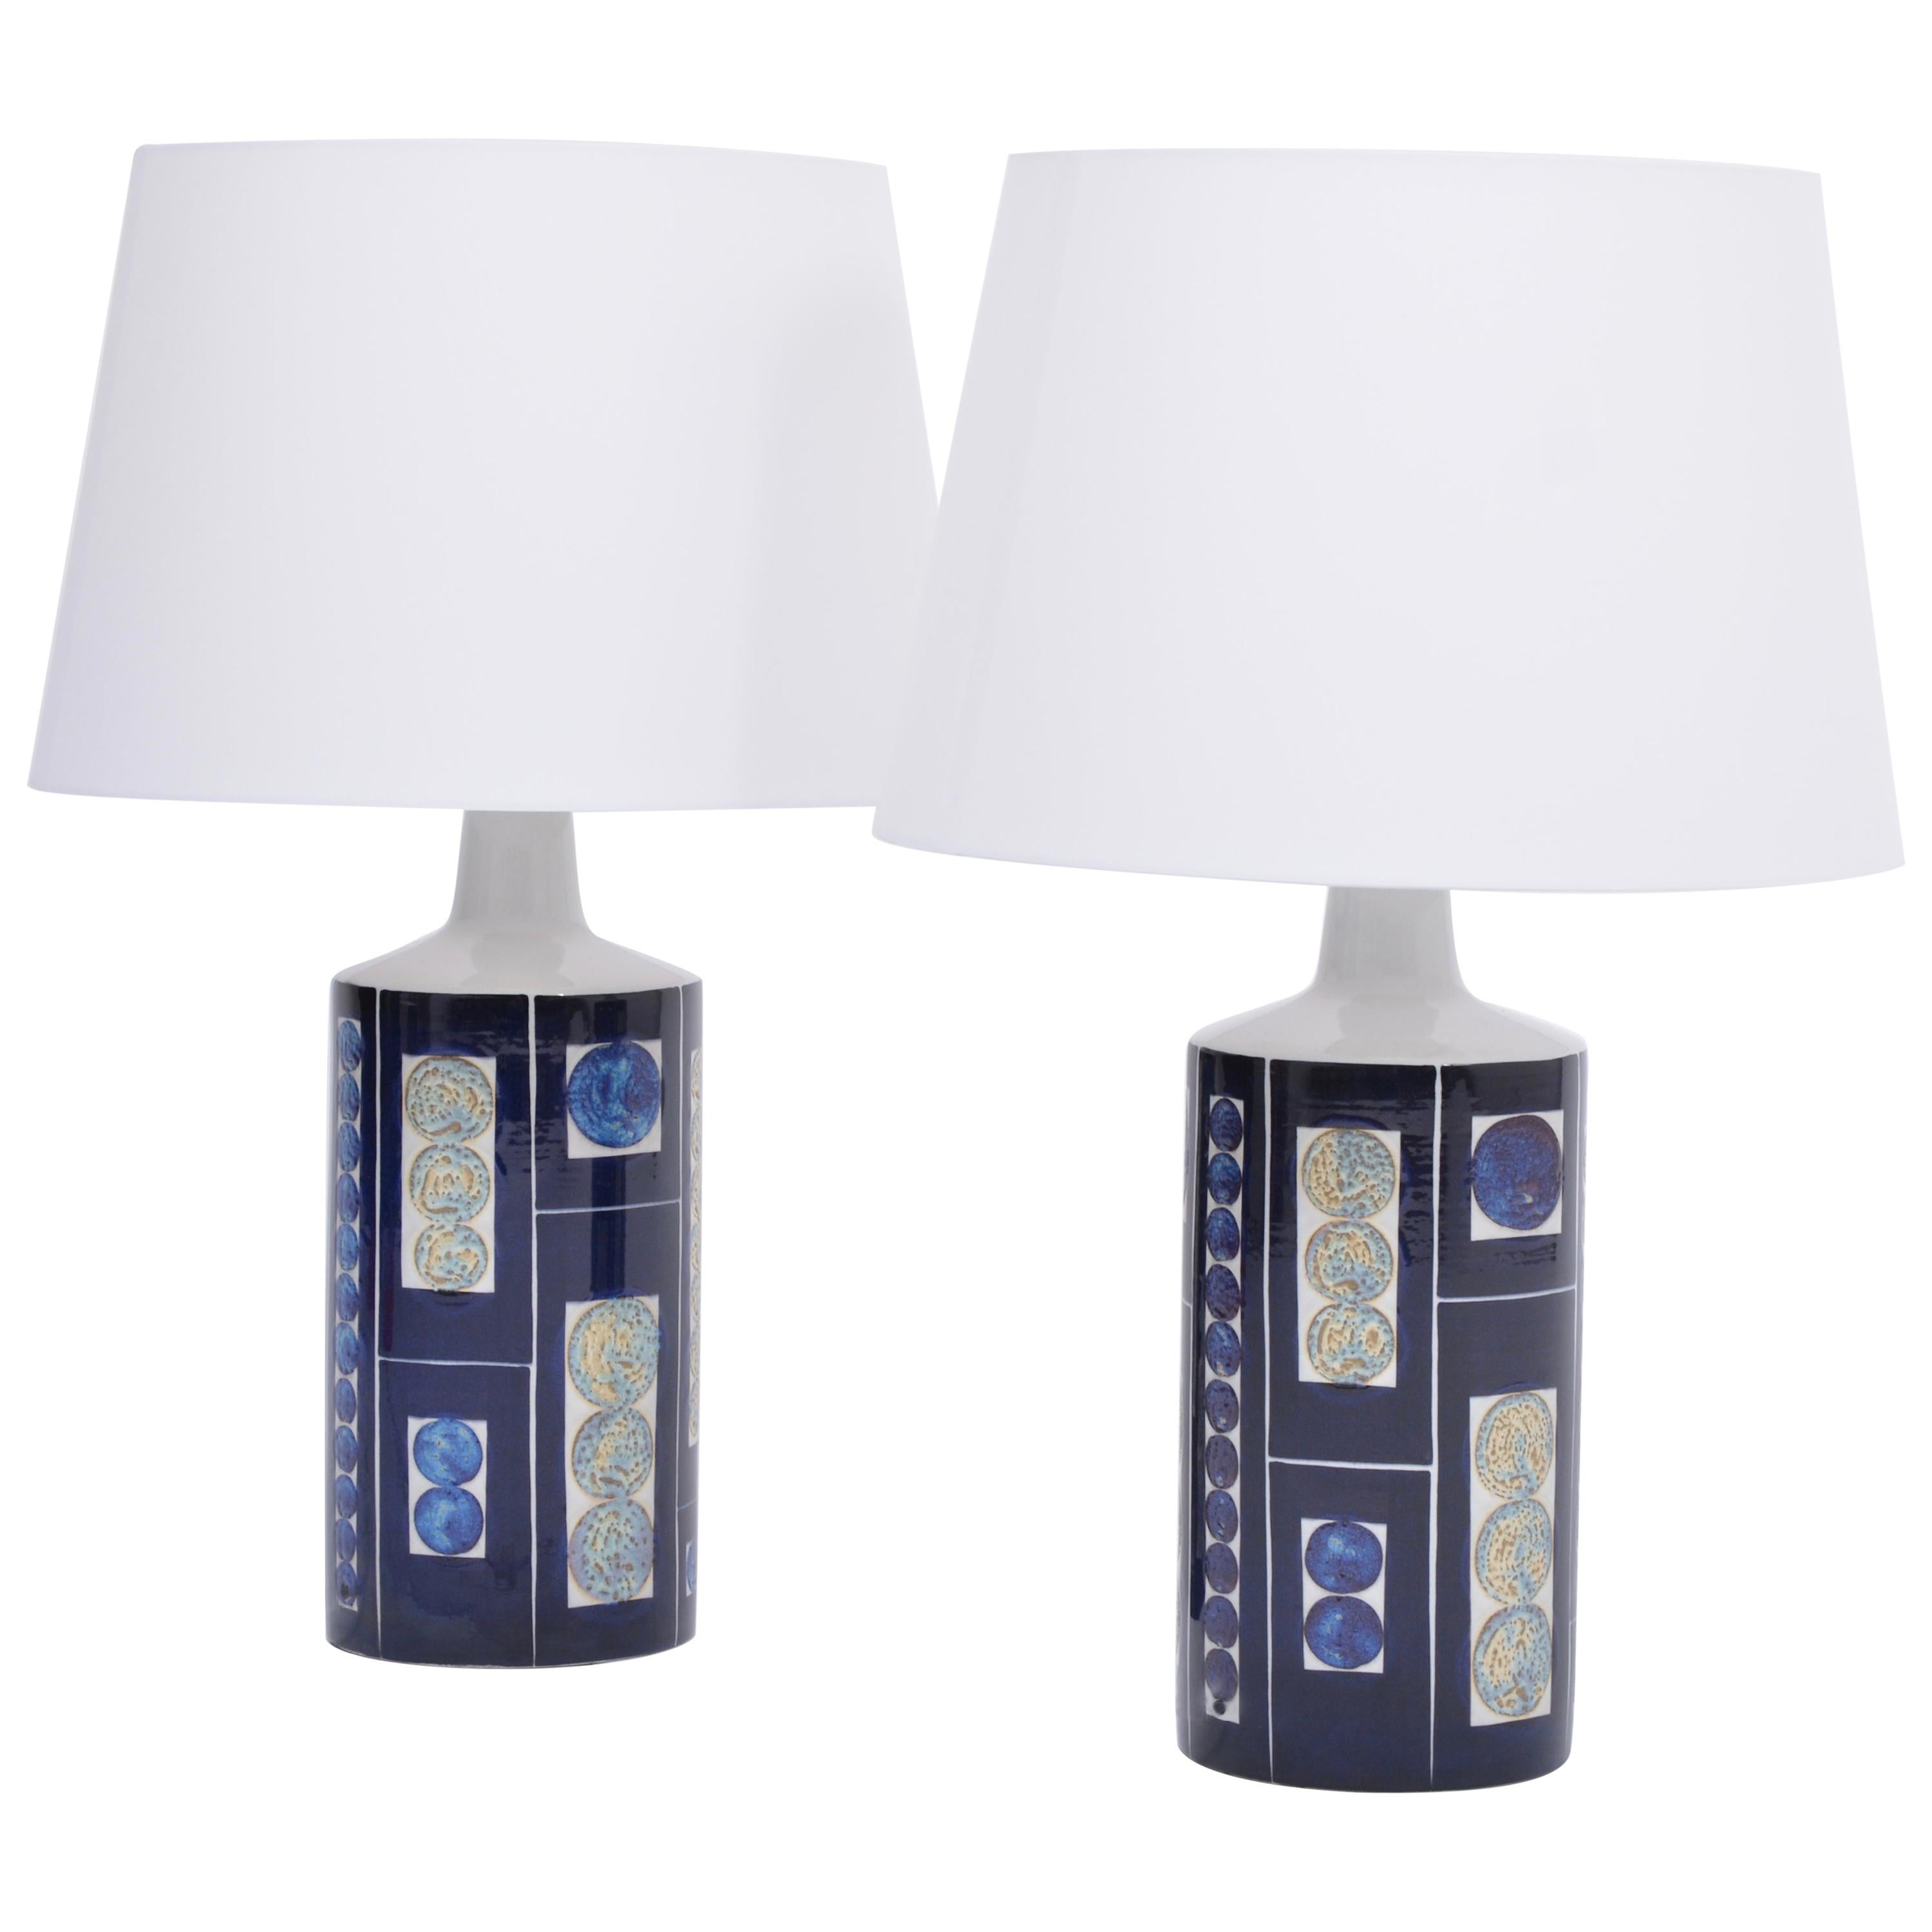 Pair of blue Mid-Century Modern table lamps by Ingelise Koefoed for Fog & Mørup